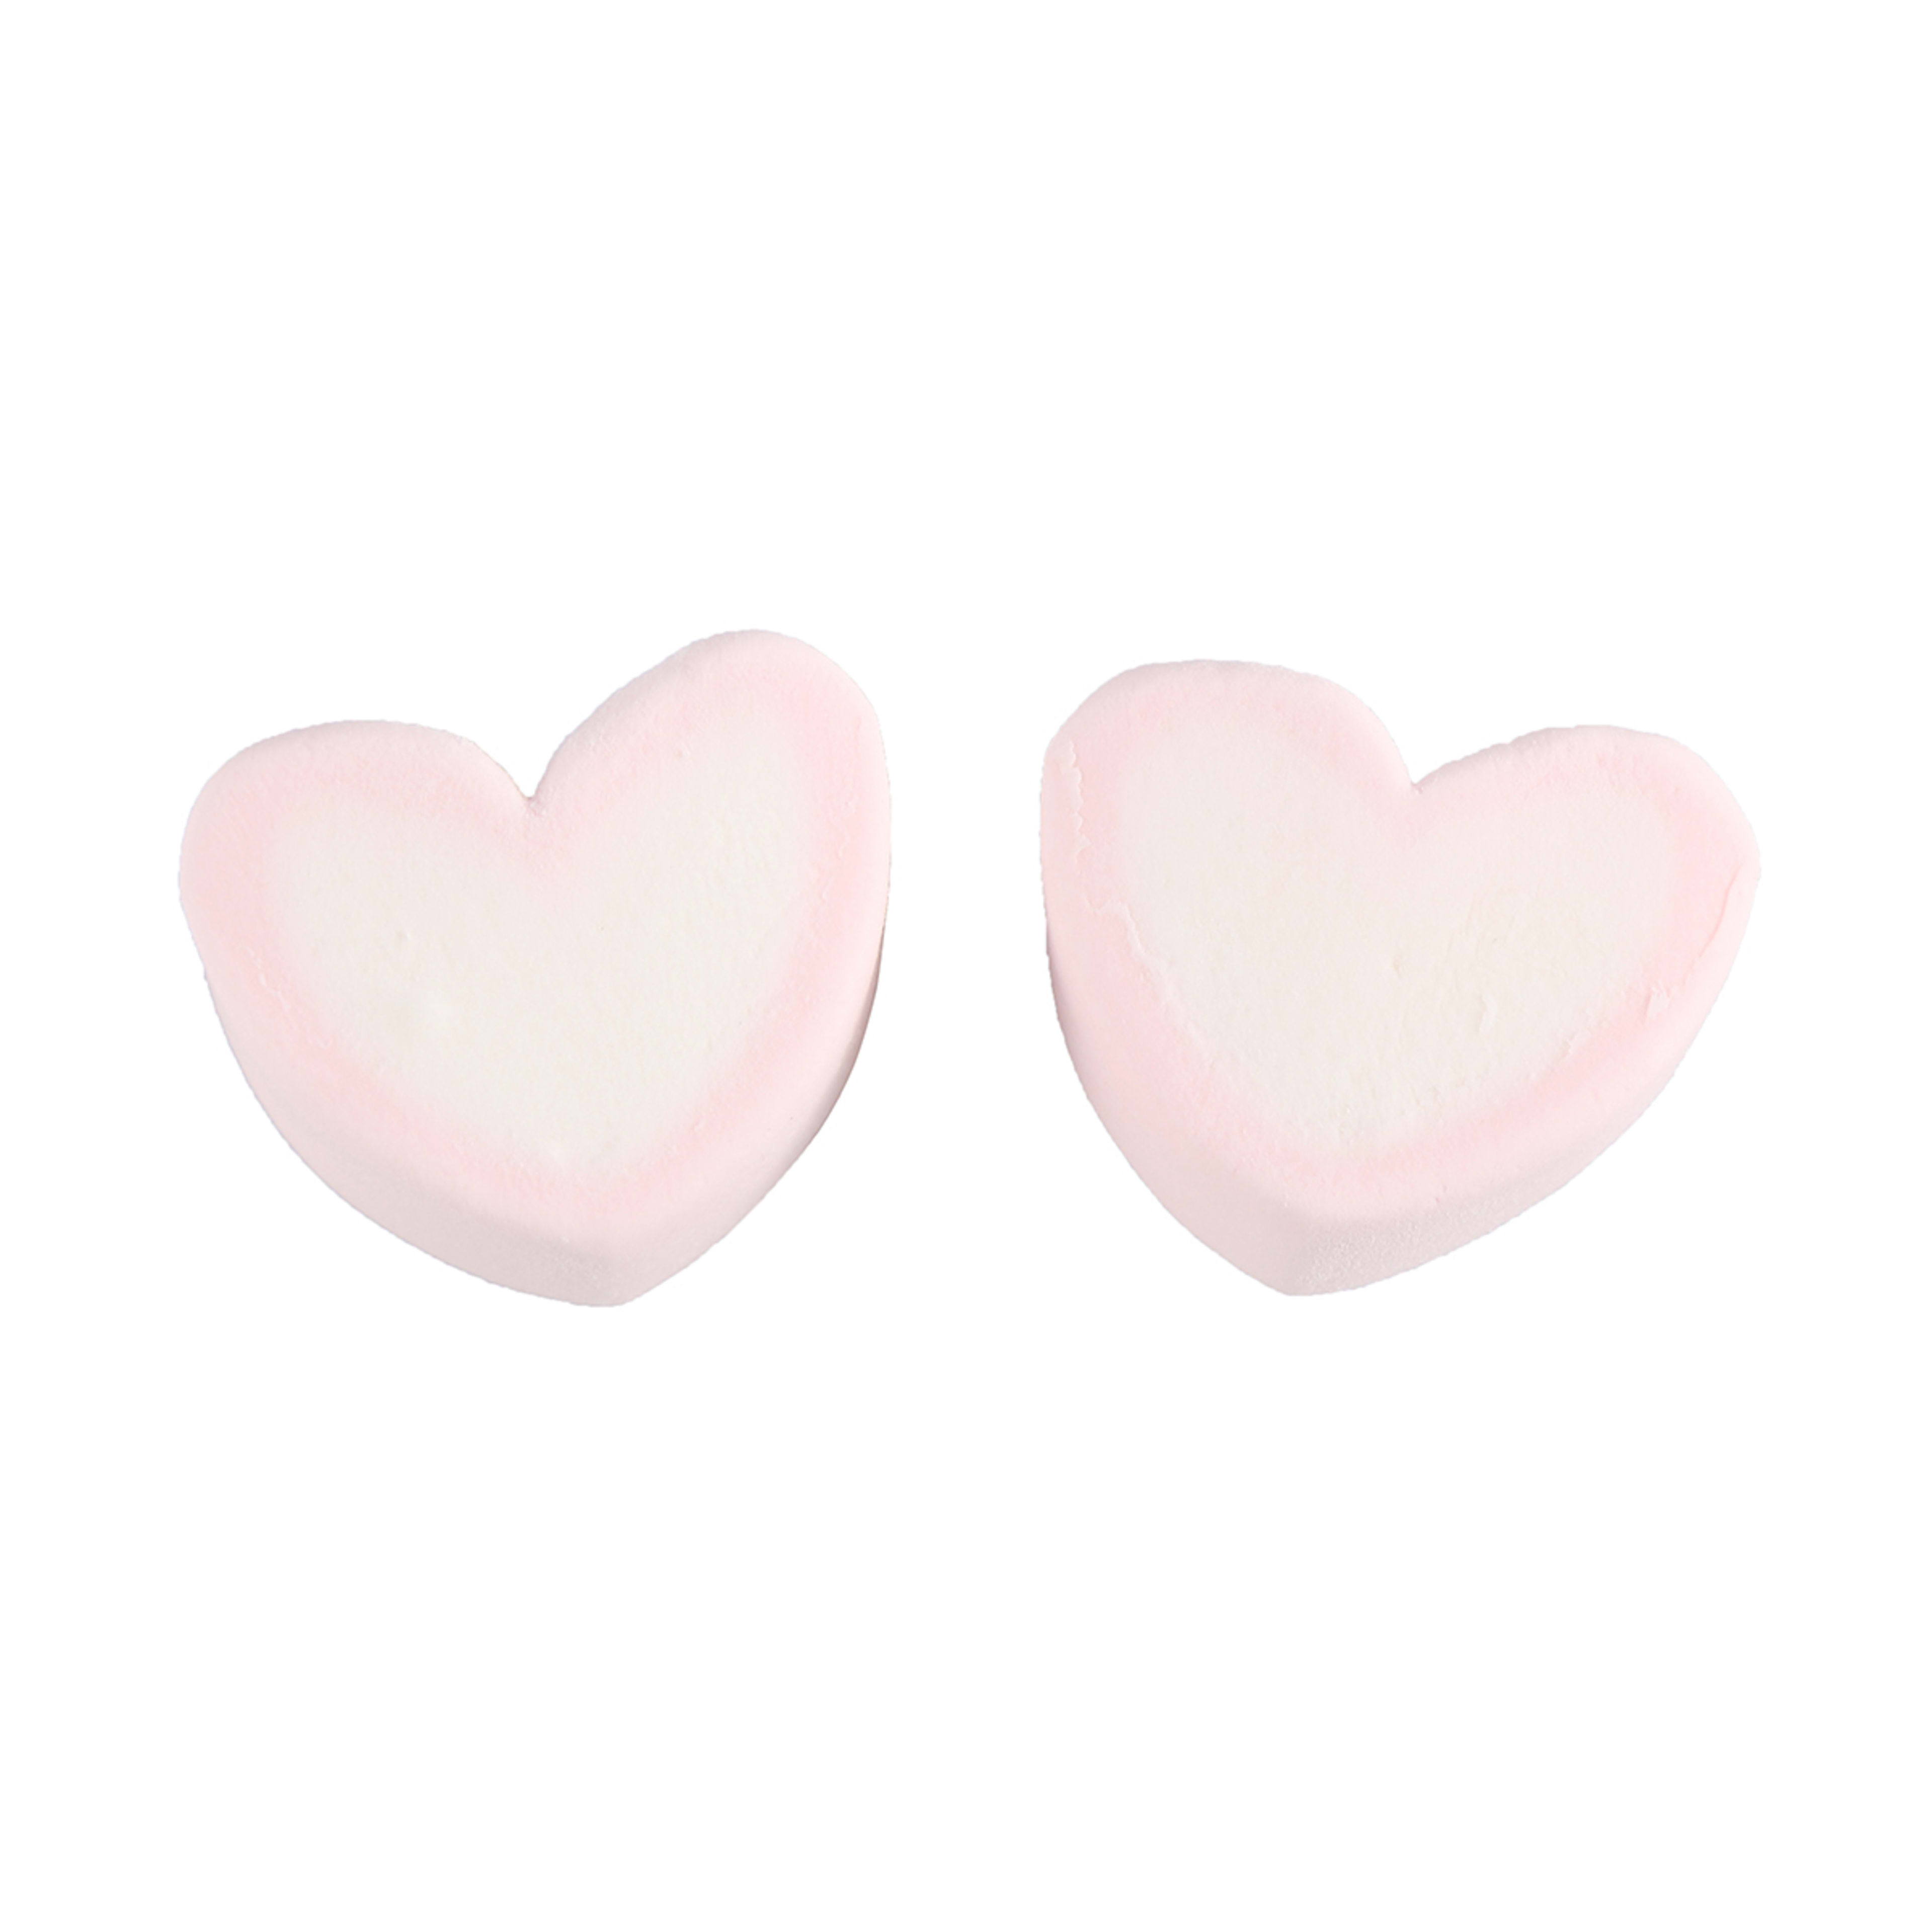 Mega Marshmallow Hearts 120g - Kmart